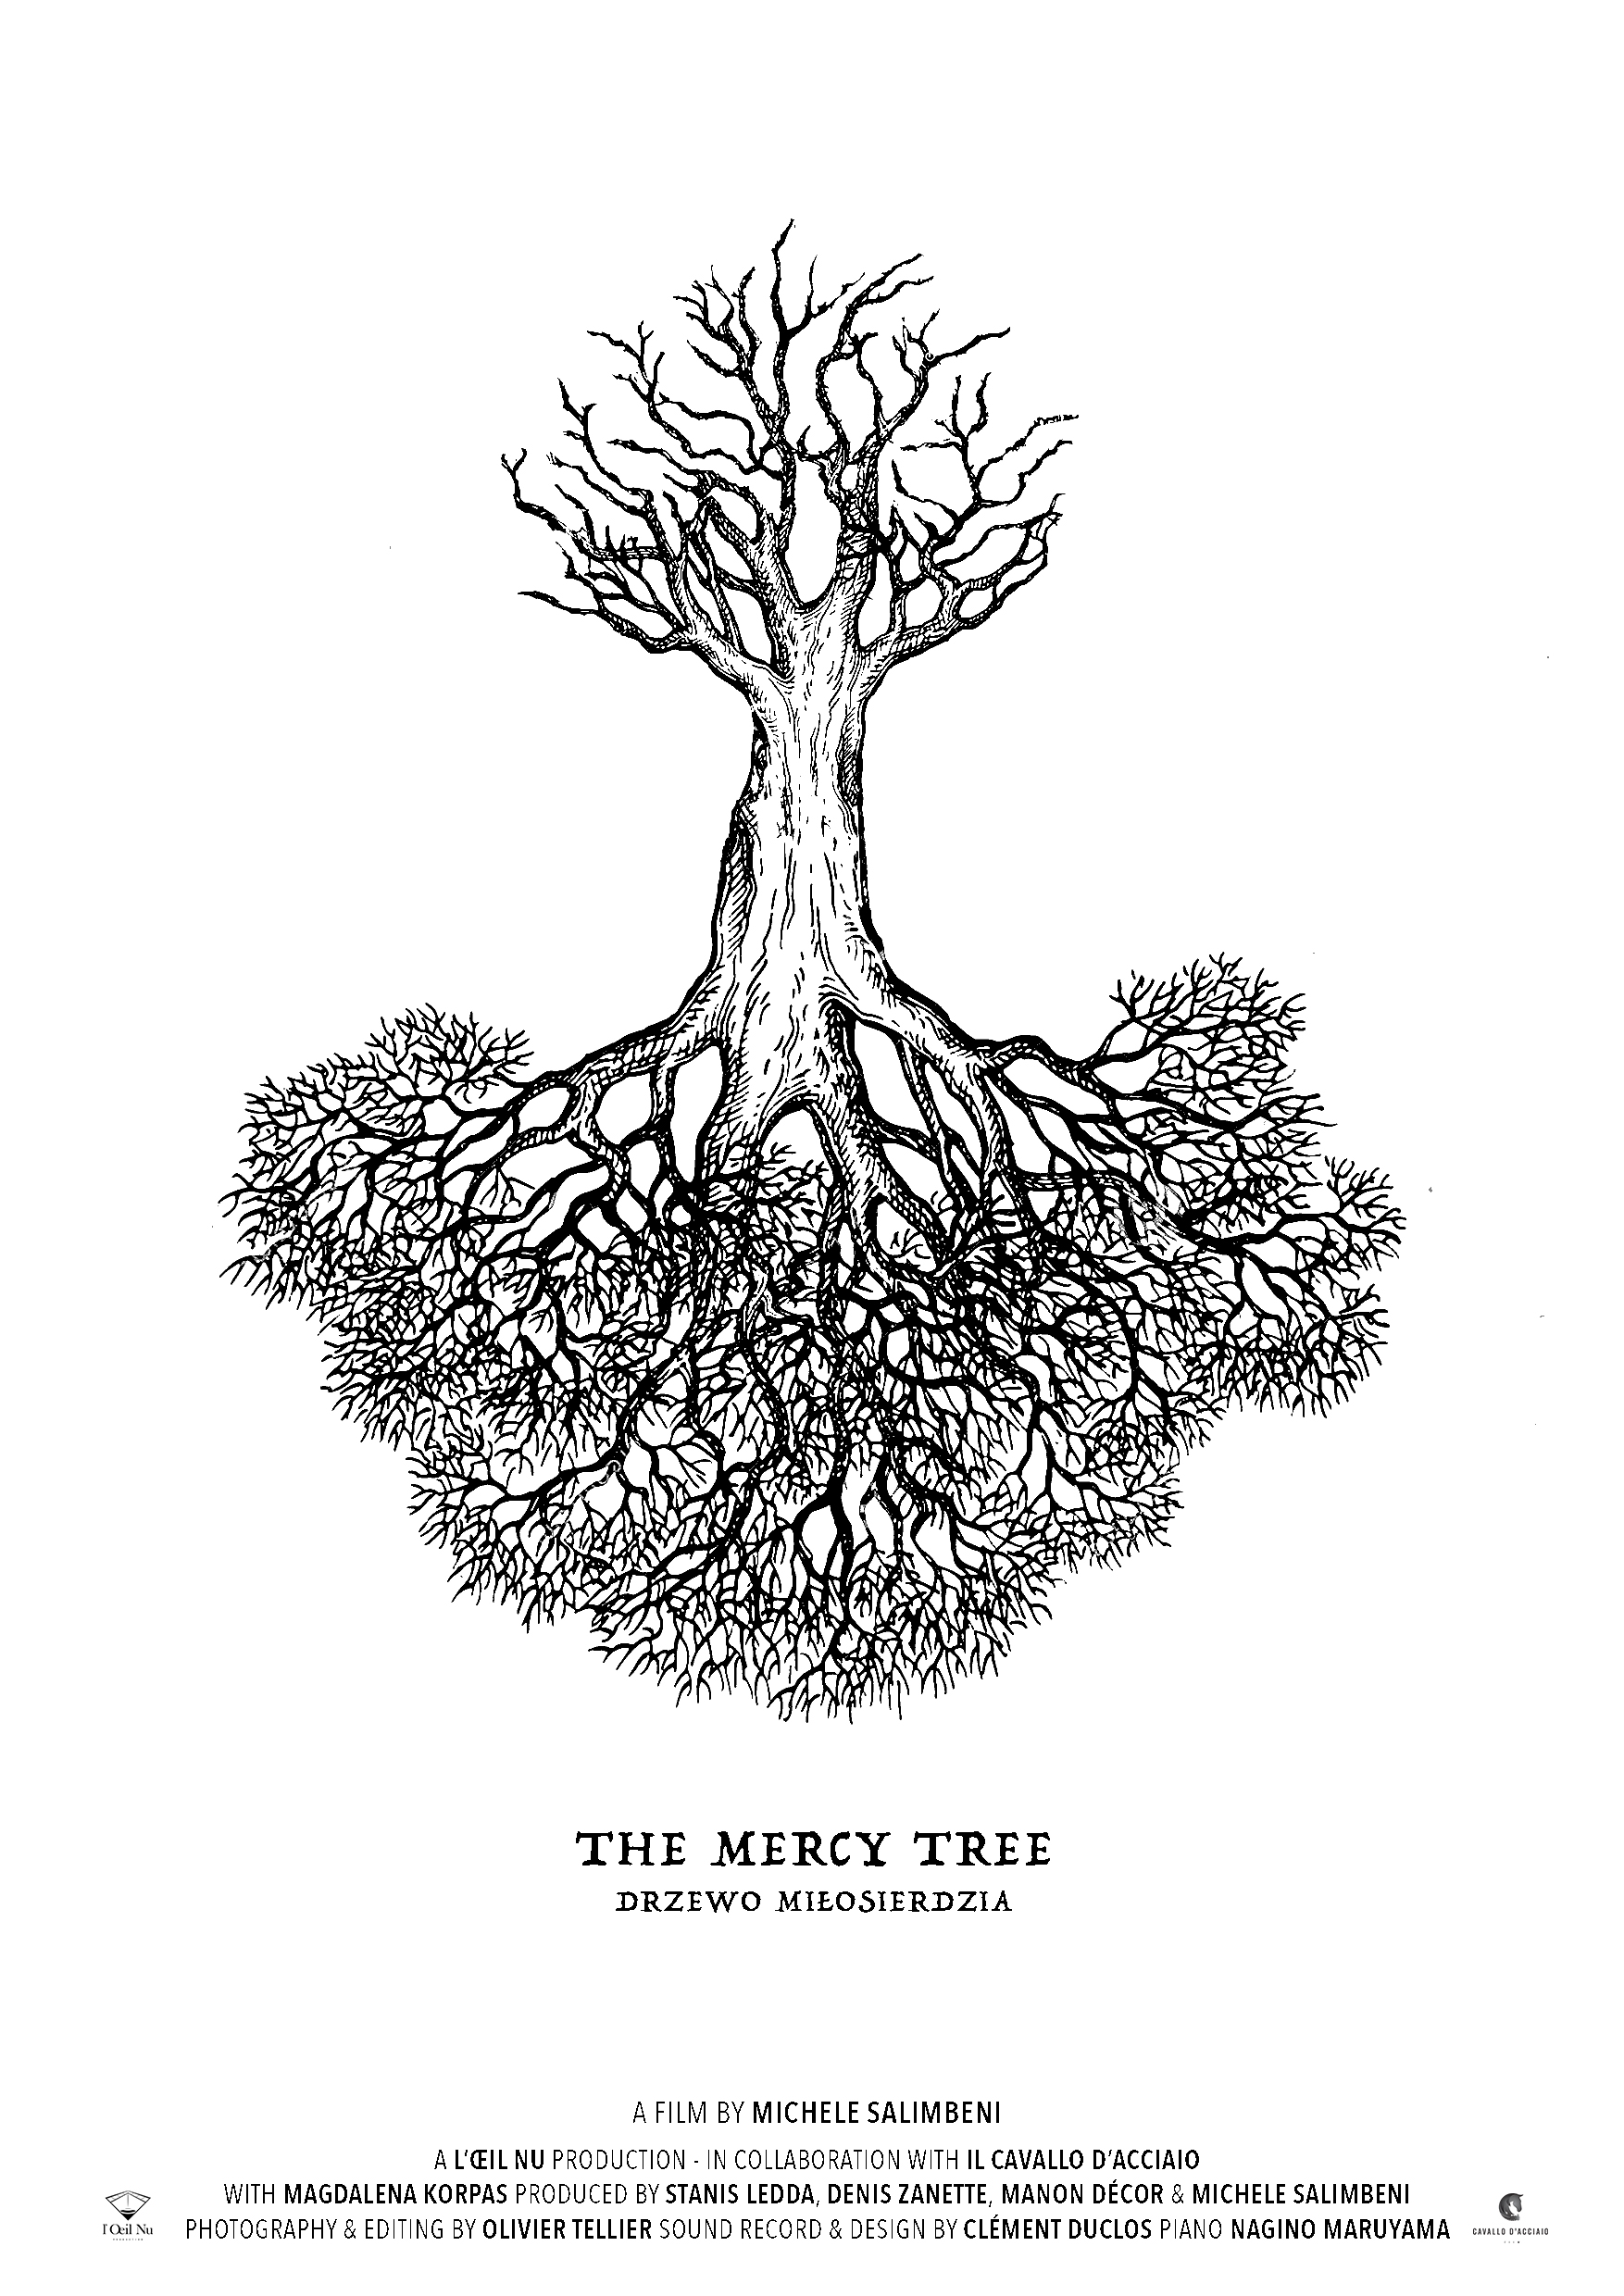 The Mercy Tree